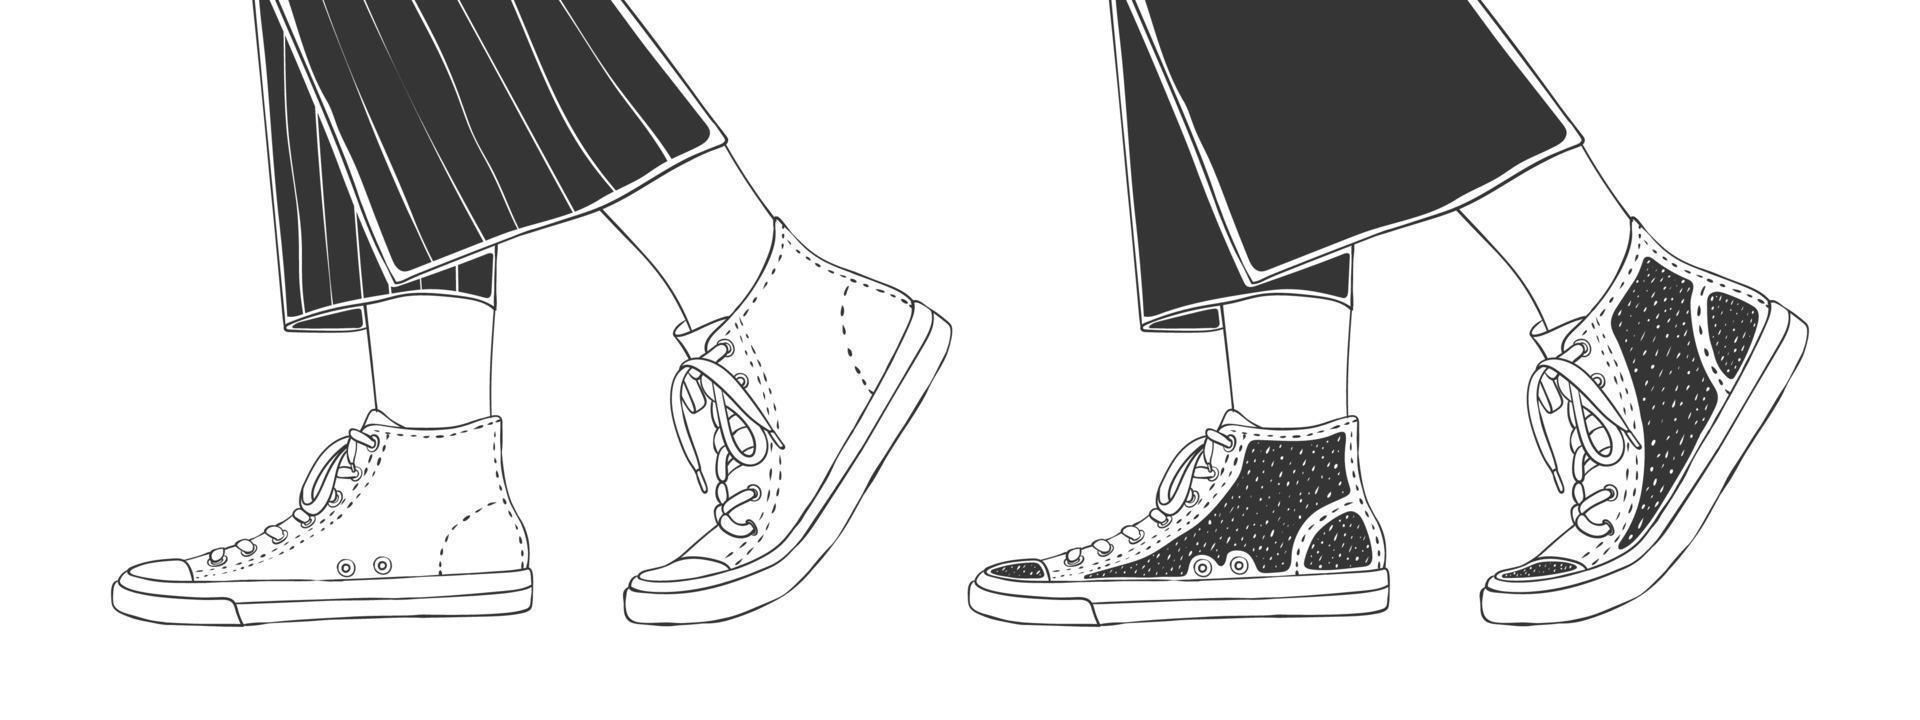 piernas calzadas zapatillas de deporte. calzado de moda. zapatos de estilo dibujados a mano. imagen vectorial vector